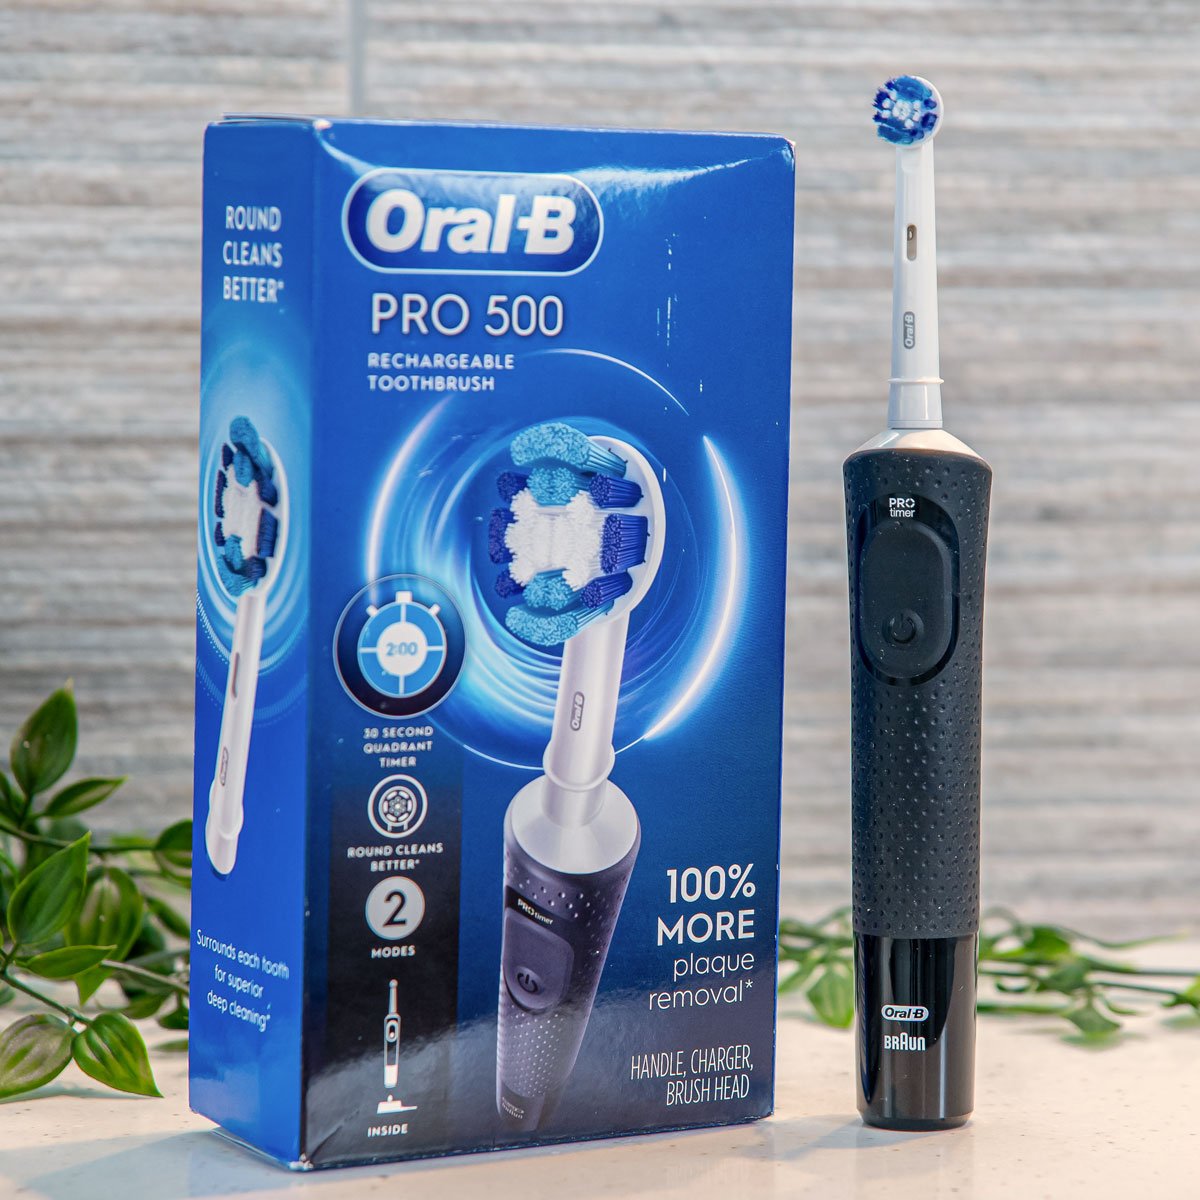 Oral-B Pro 500 electric toothbrush stood next to retail box